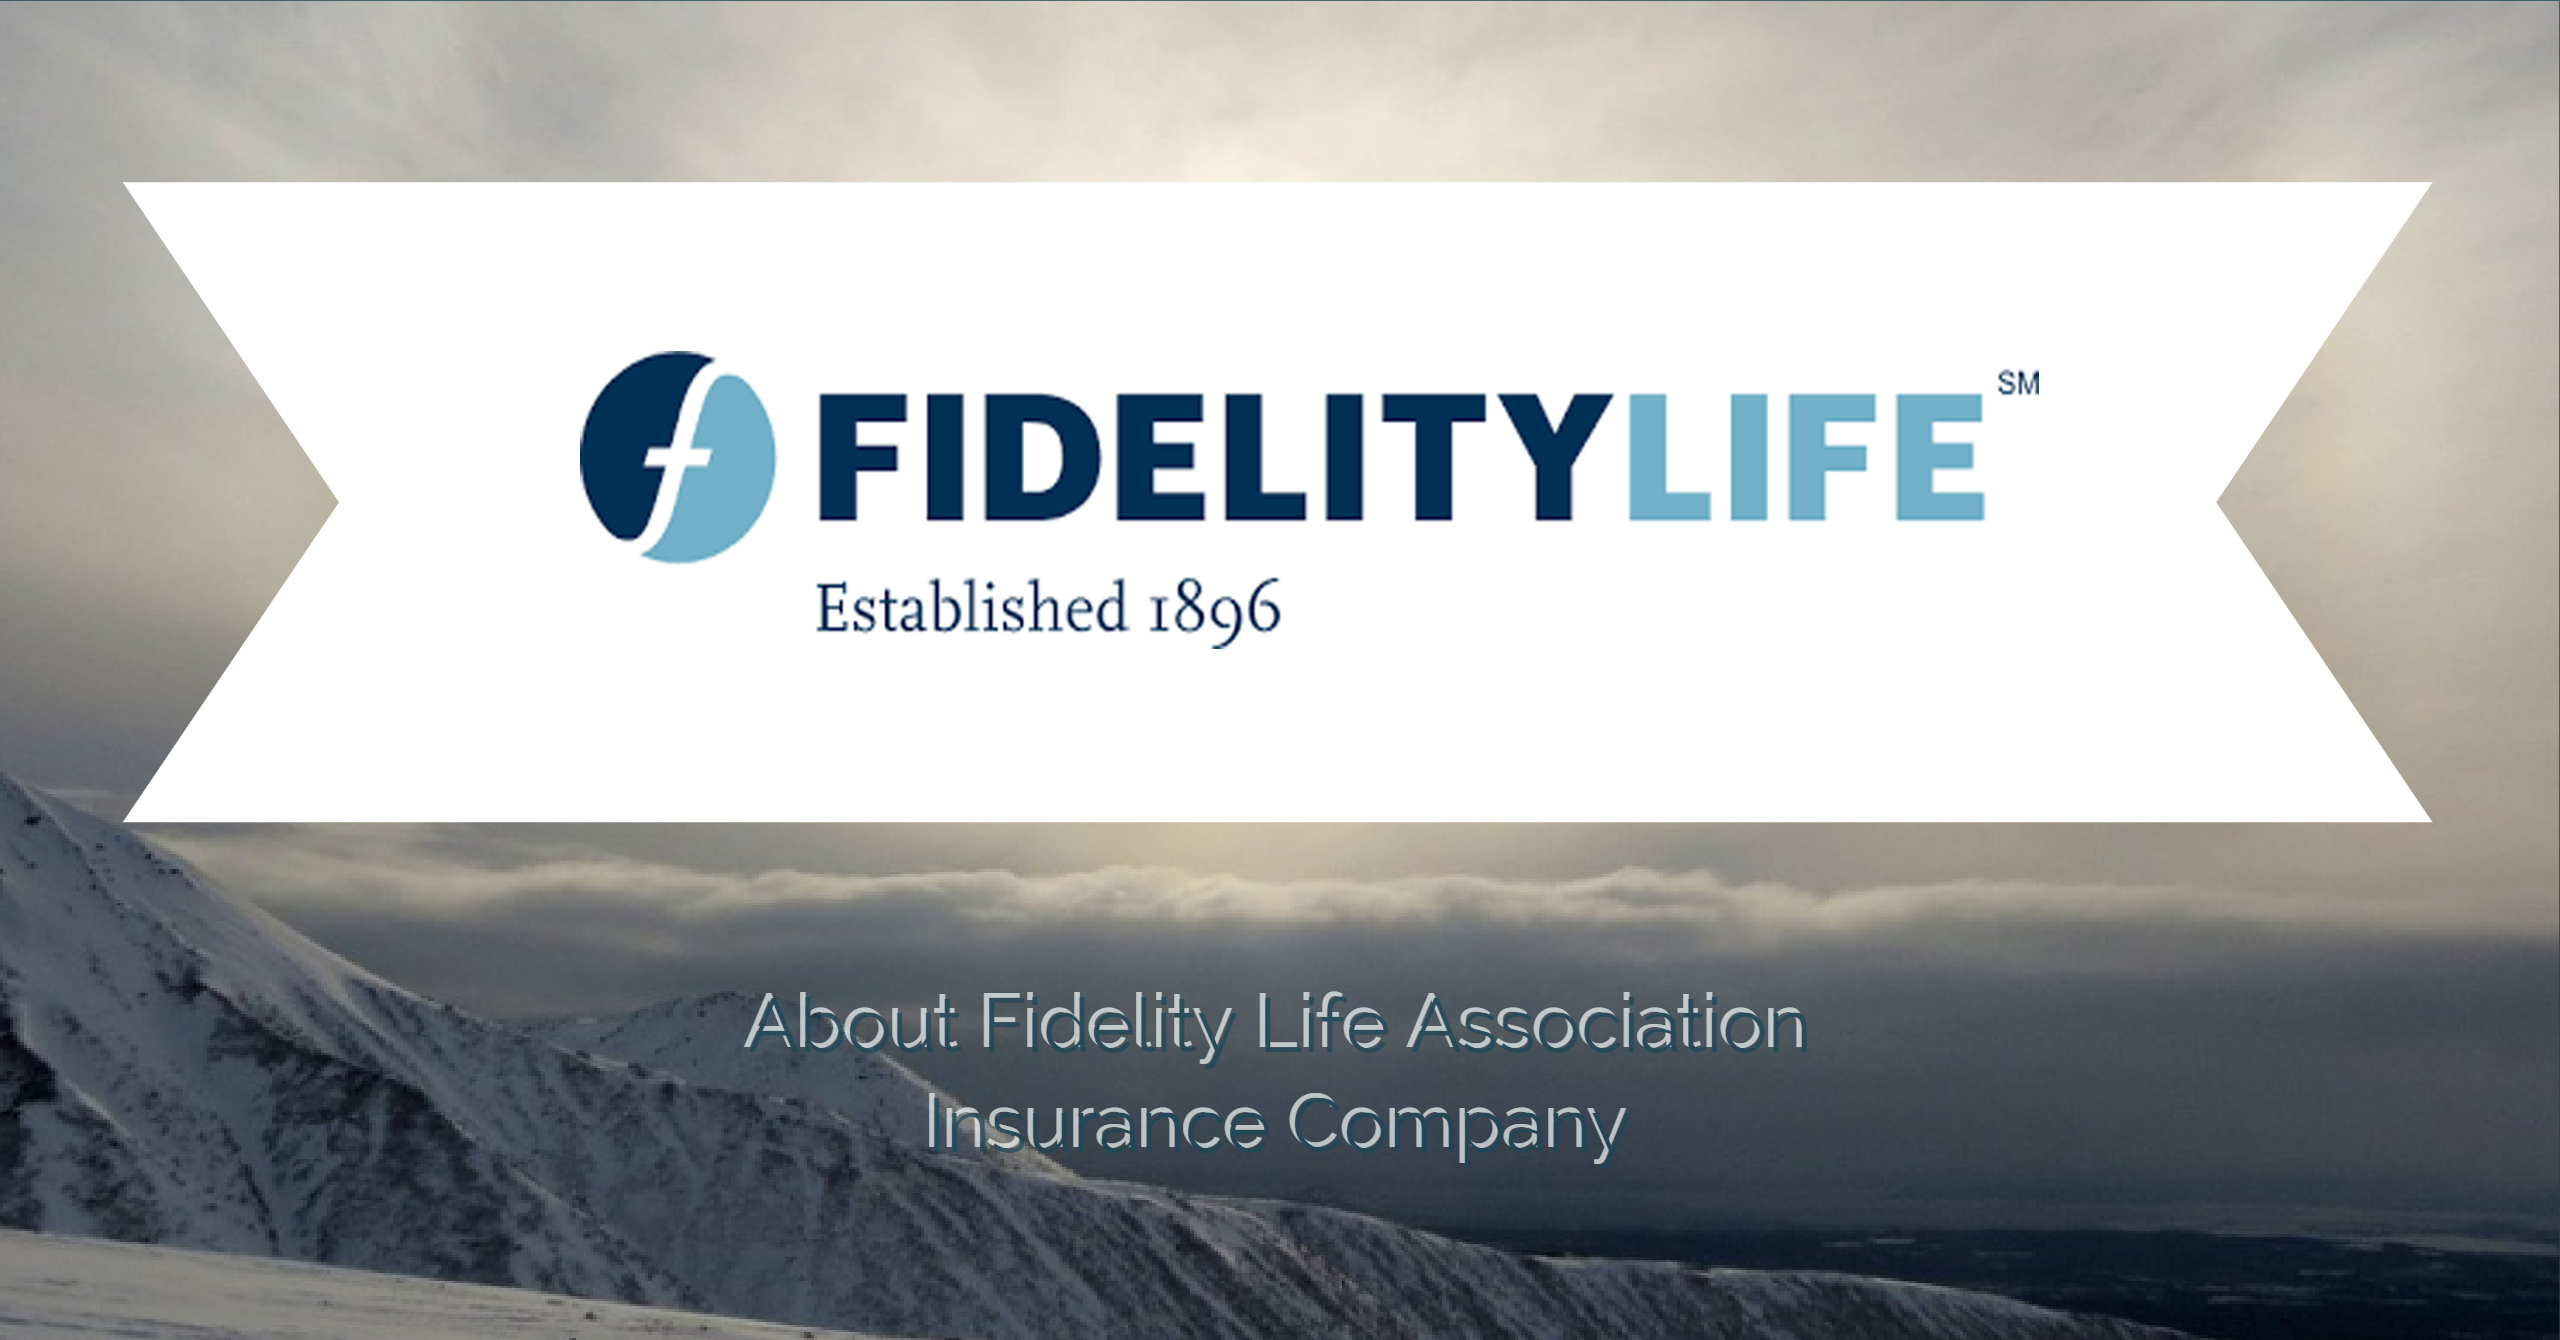 Fidelity Life Association Insurance Company